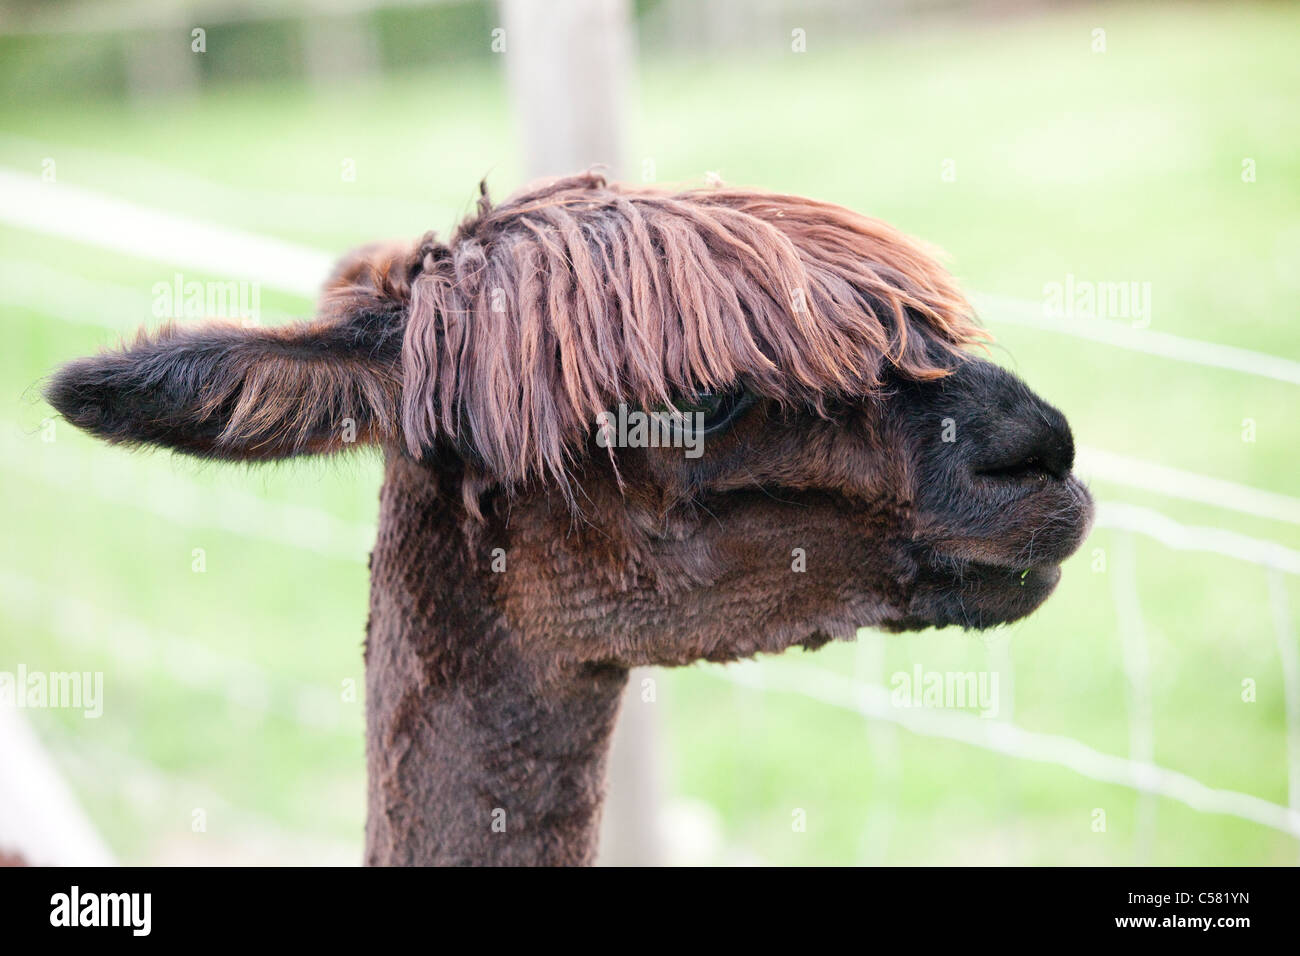 Suri alpaca with a fringe on top. Stock Photo